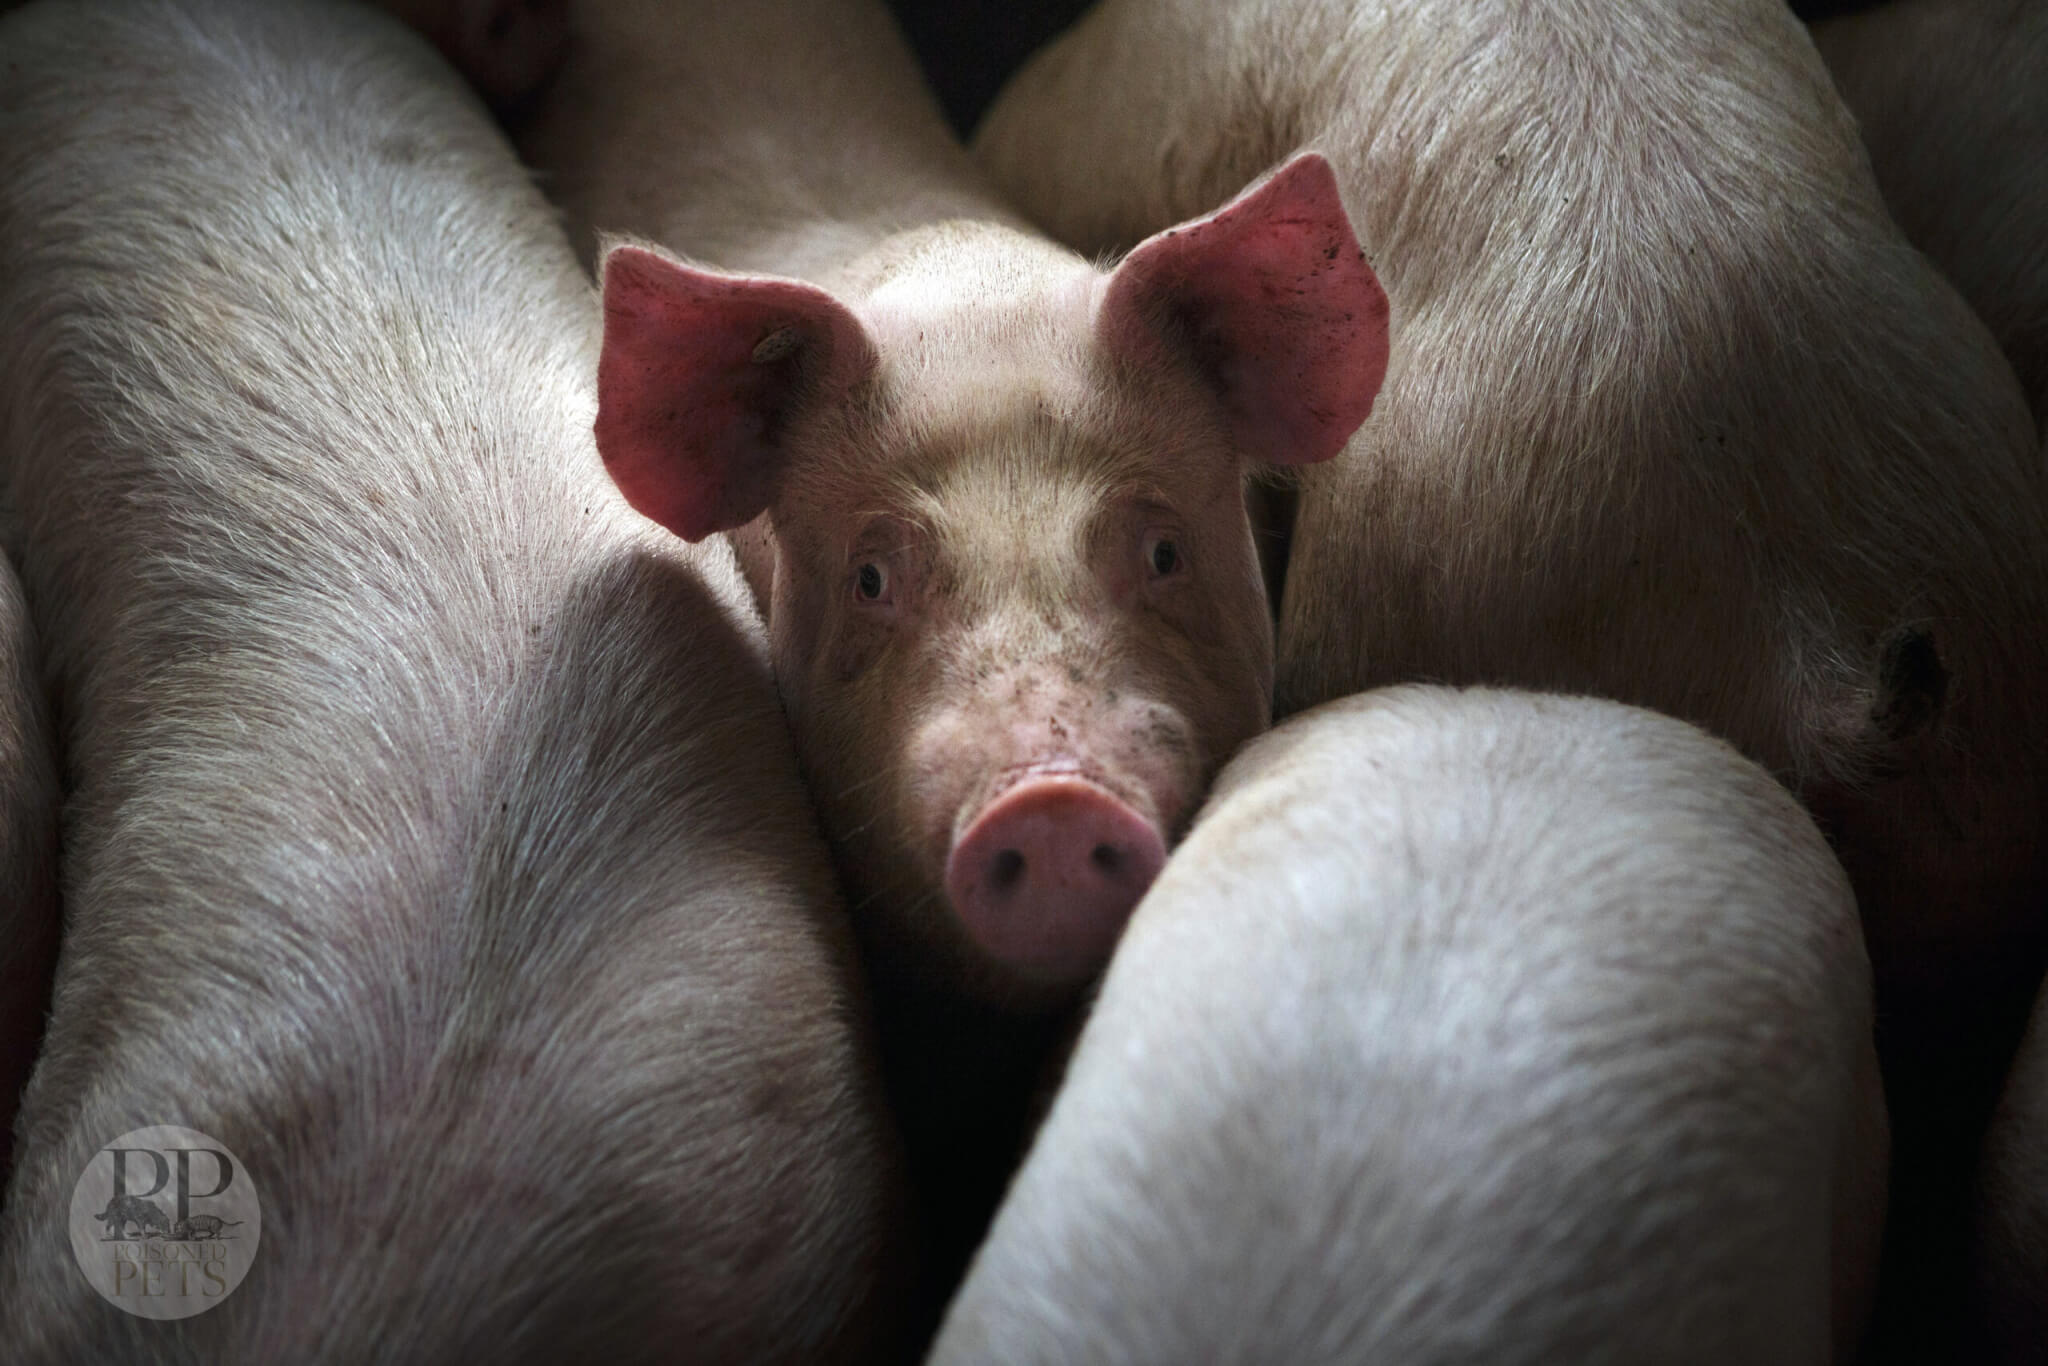 pigs cows livestock animal food feed human food waste bakery waste